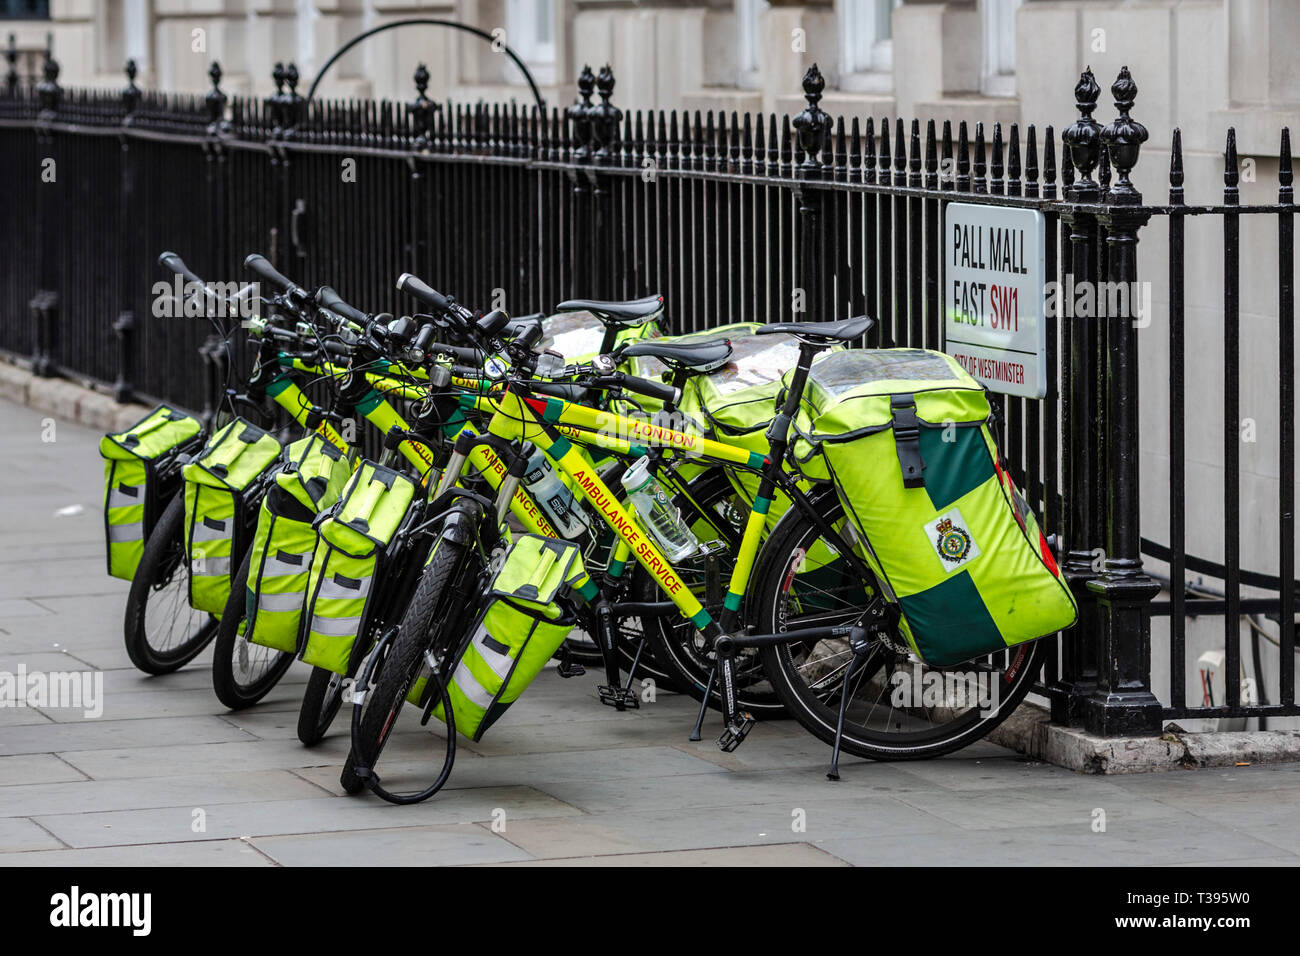 London Ambulance Service Bicycles, Pall Mall East, London, Saturday, March 23, 2019.Photo: David Rowland / One-Image.com Stock Photo